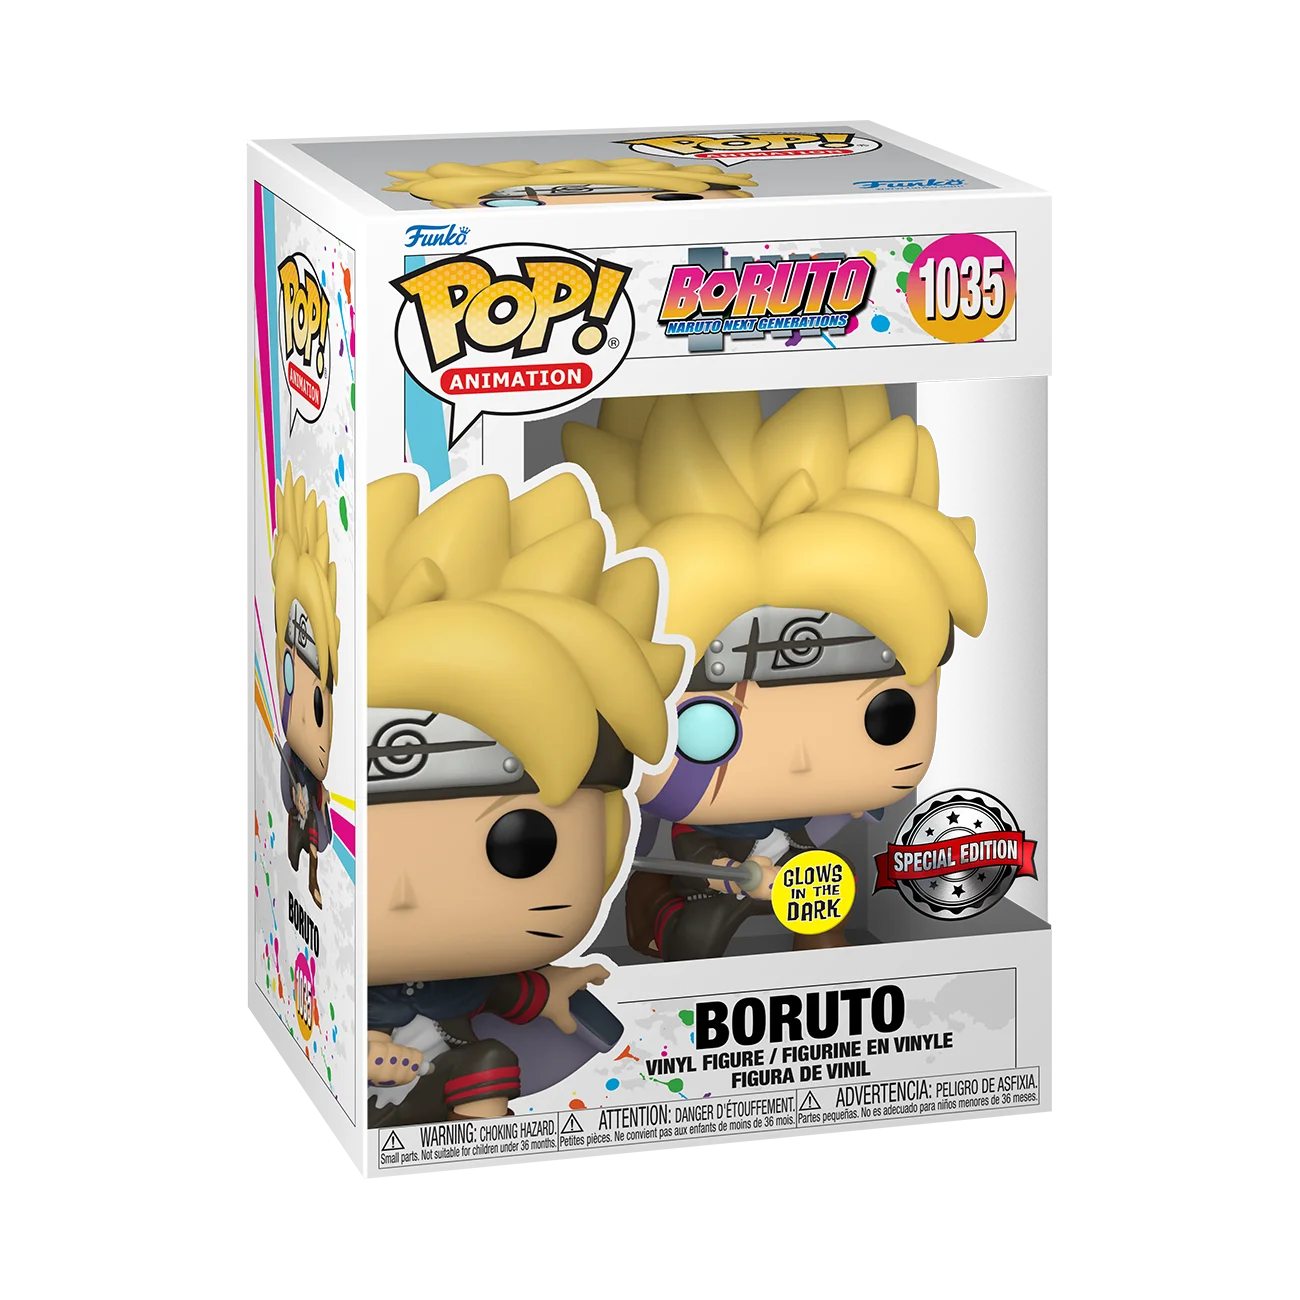 Funko Pop! Animation: 1035 - Boruto Naruto Next Generation - Boruto (GITD) 2021 Special Edition